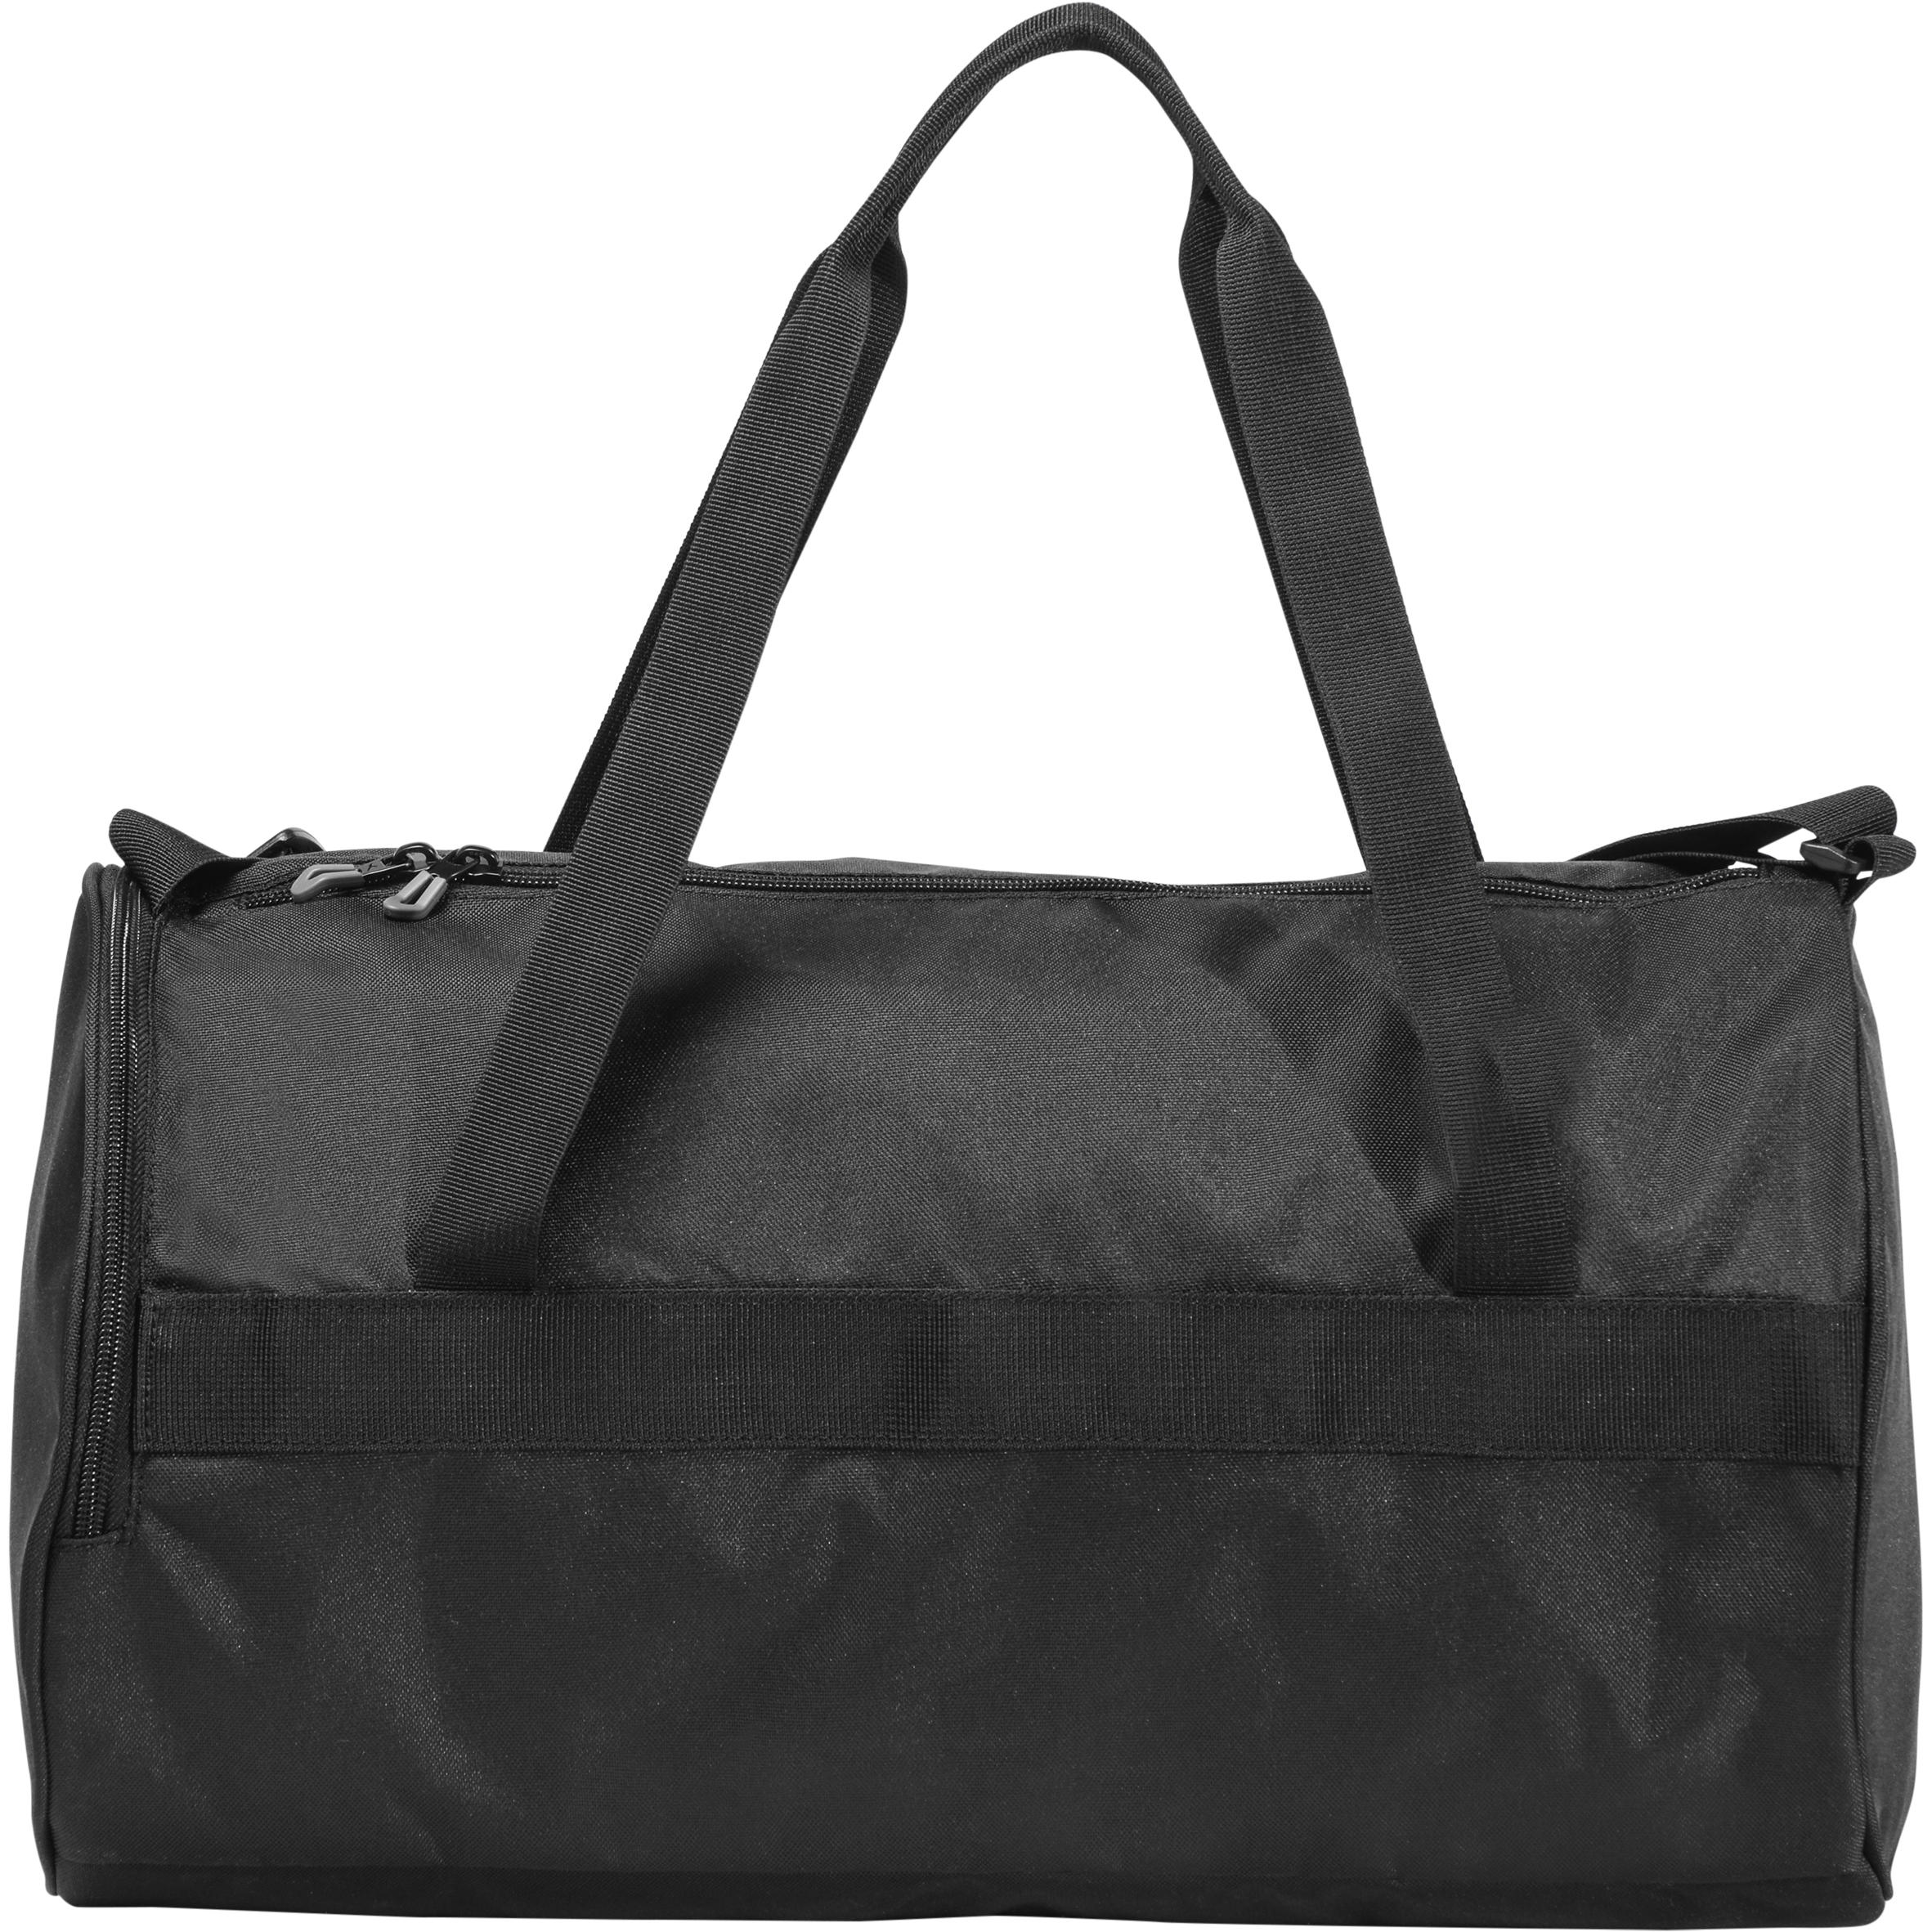 Fitness Bag 20L - Black 4/15